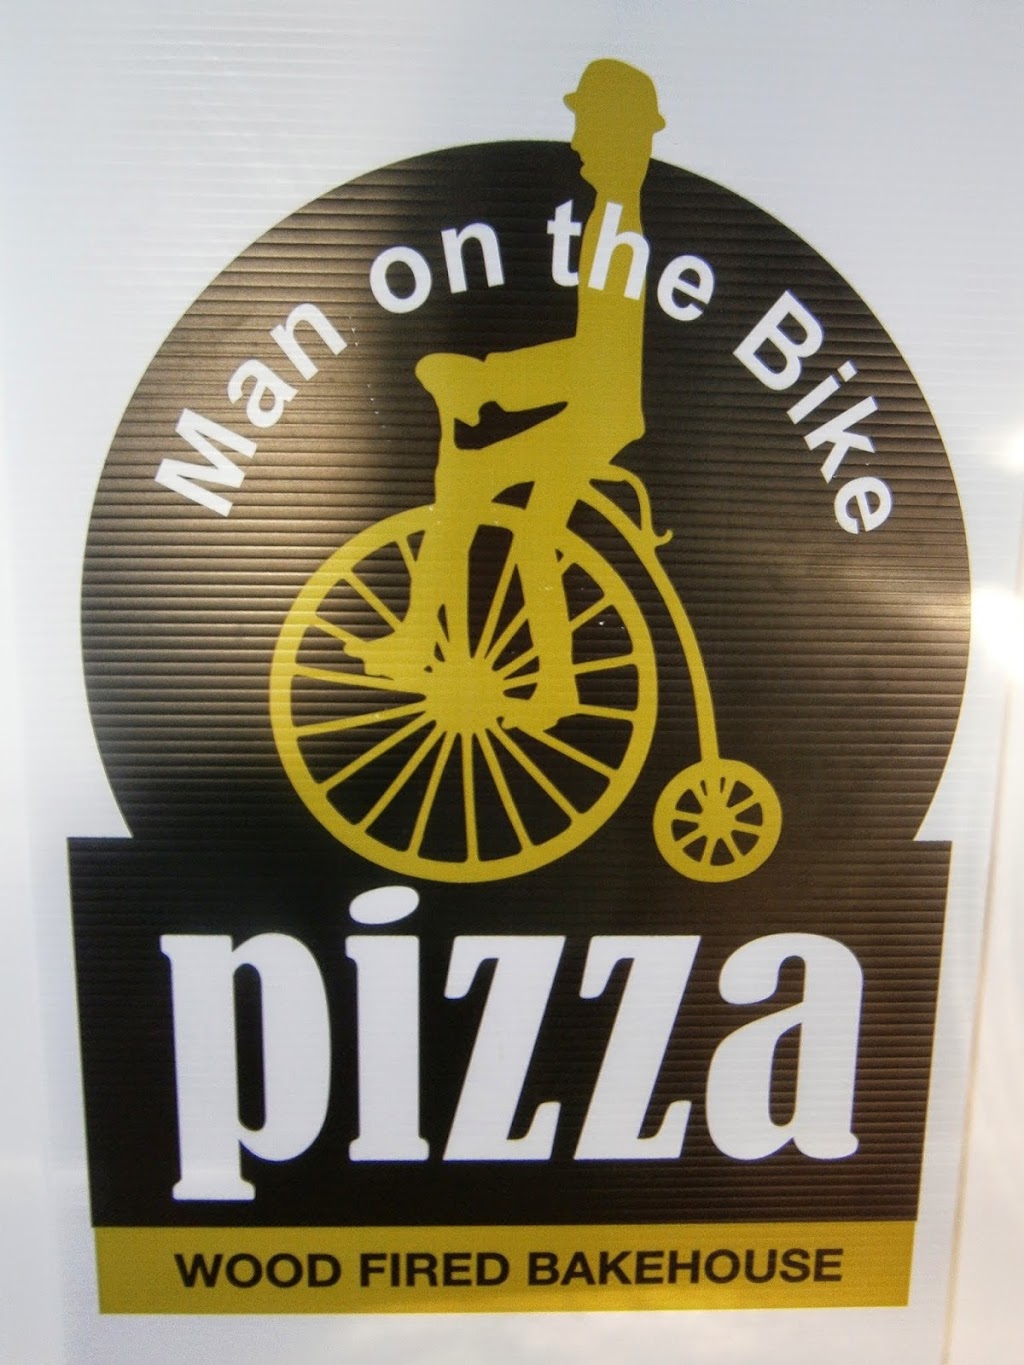 Man On The Bike Pizza | meal takeaway | 7 Trees Rd, Tallebudgera QLD 4228, Australia | 0755224999 OR +61 7 5522 4999